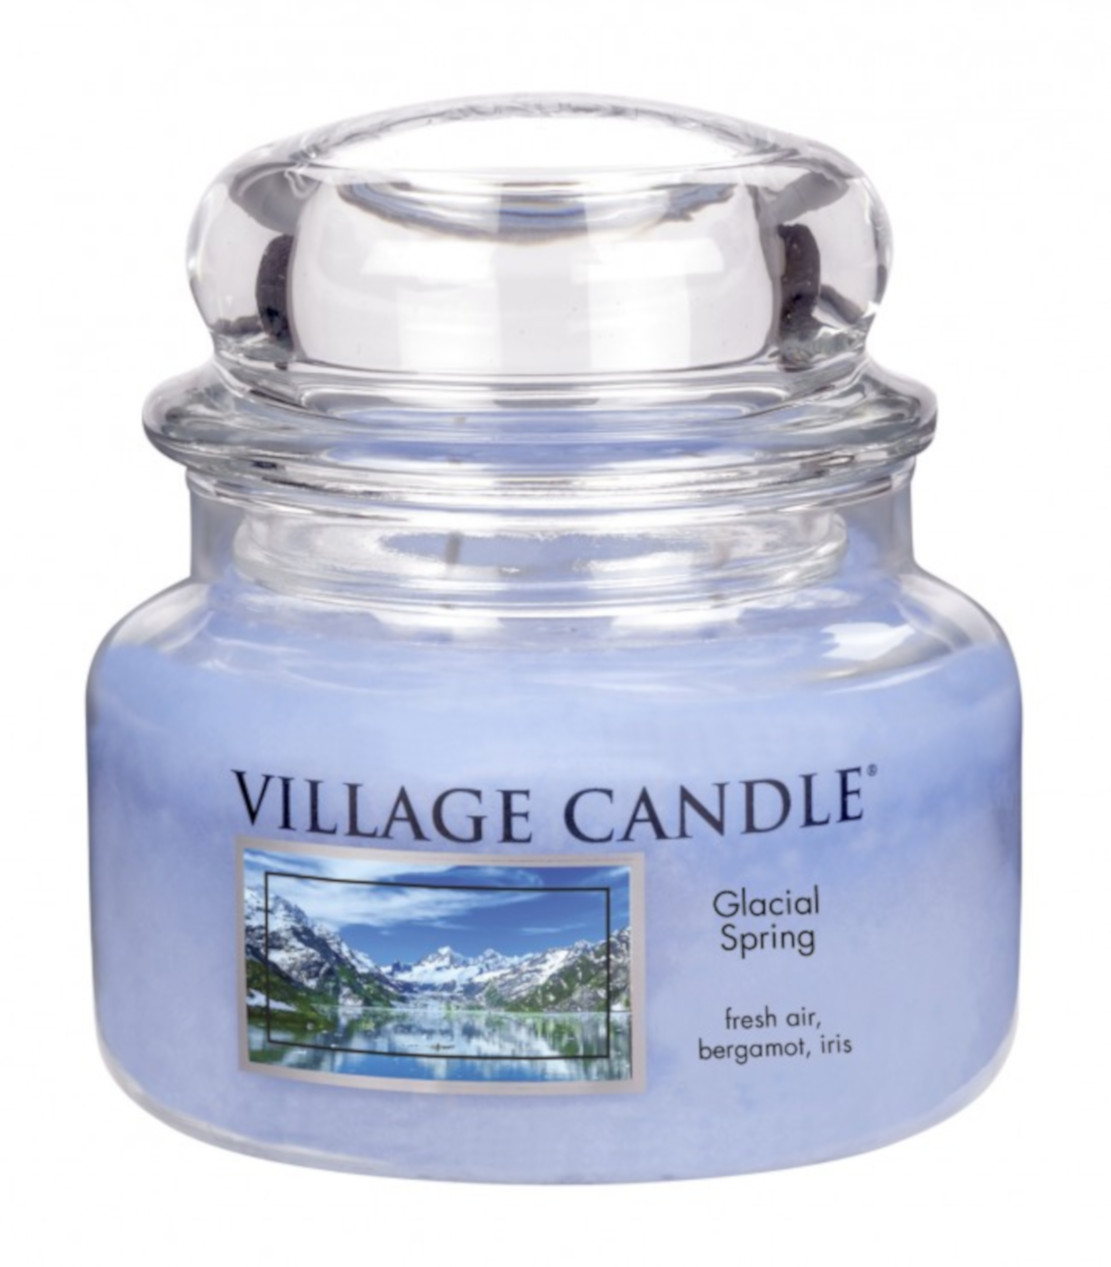 Village Candle Glacial Spring Small Jar 262g